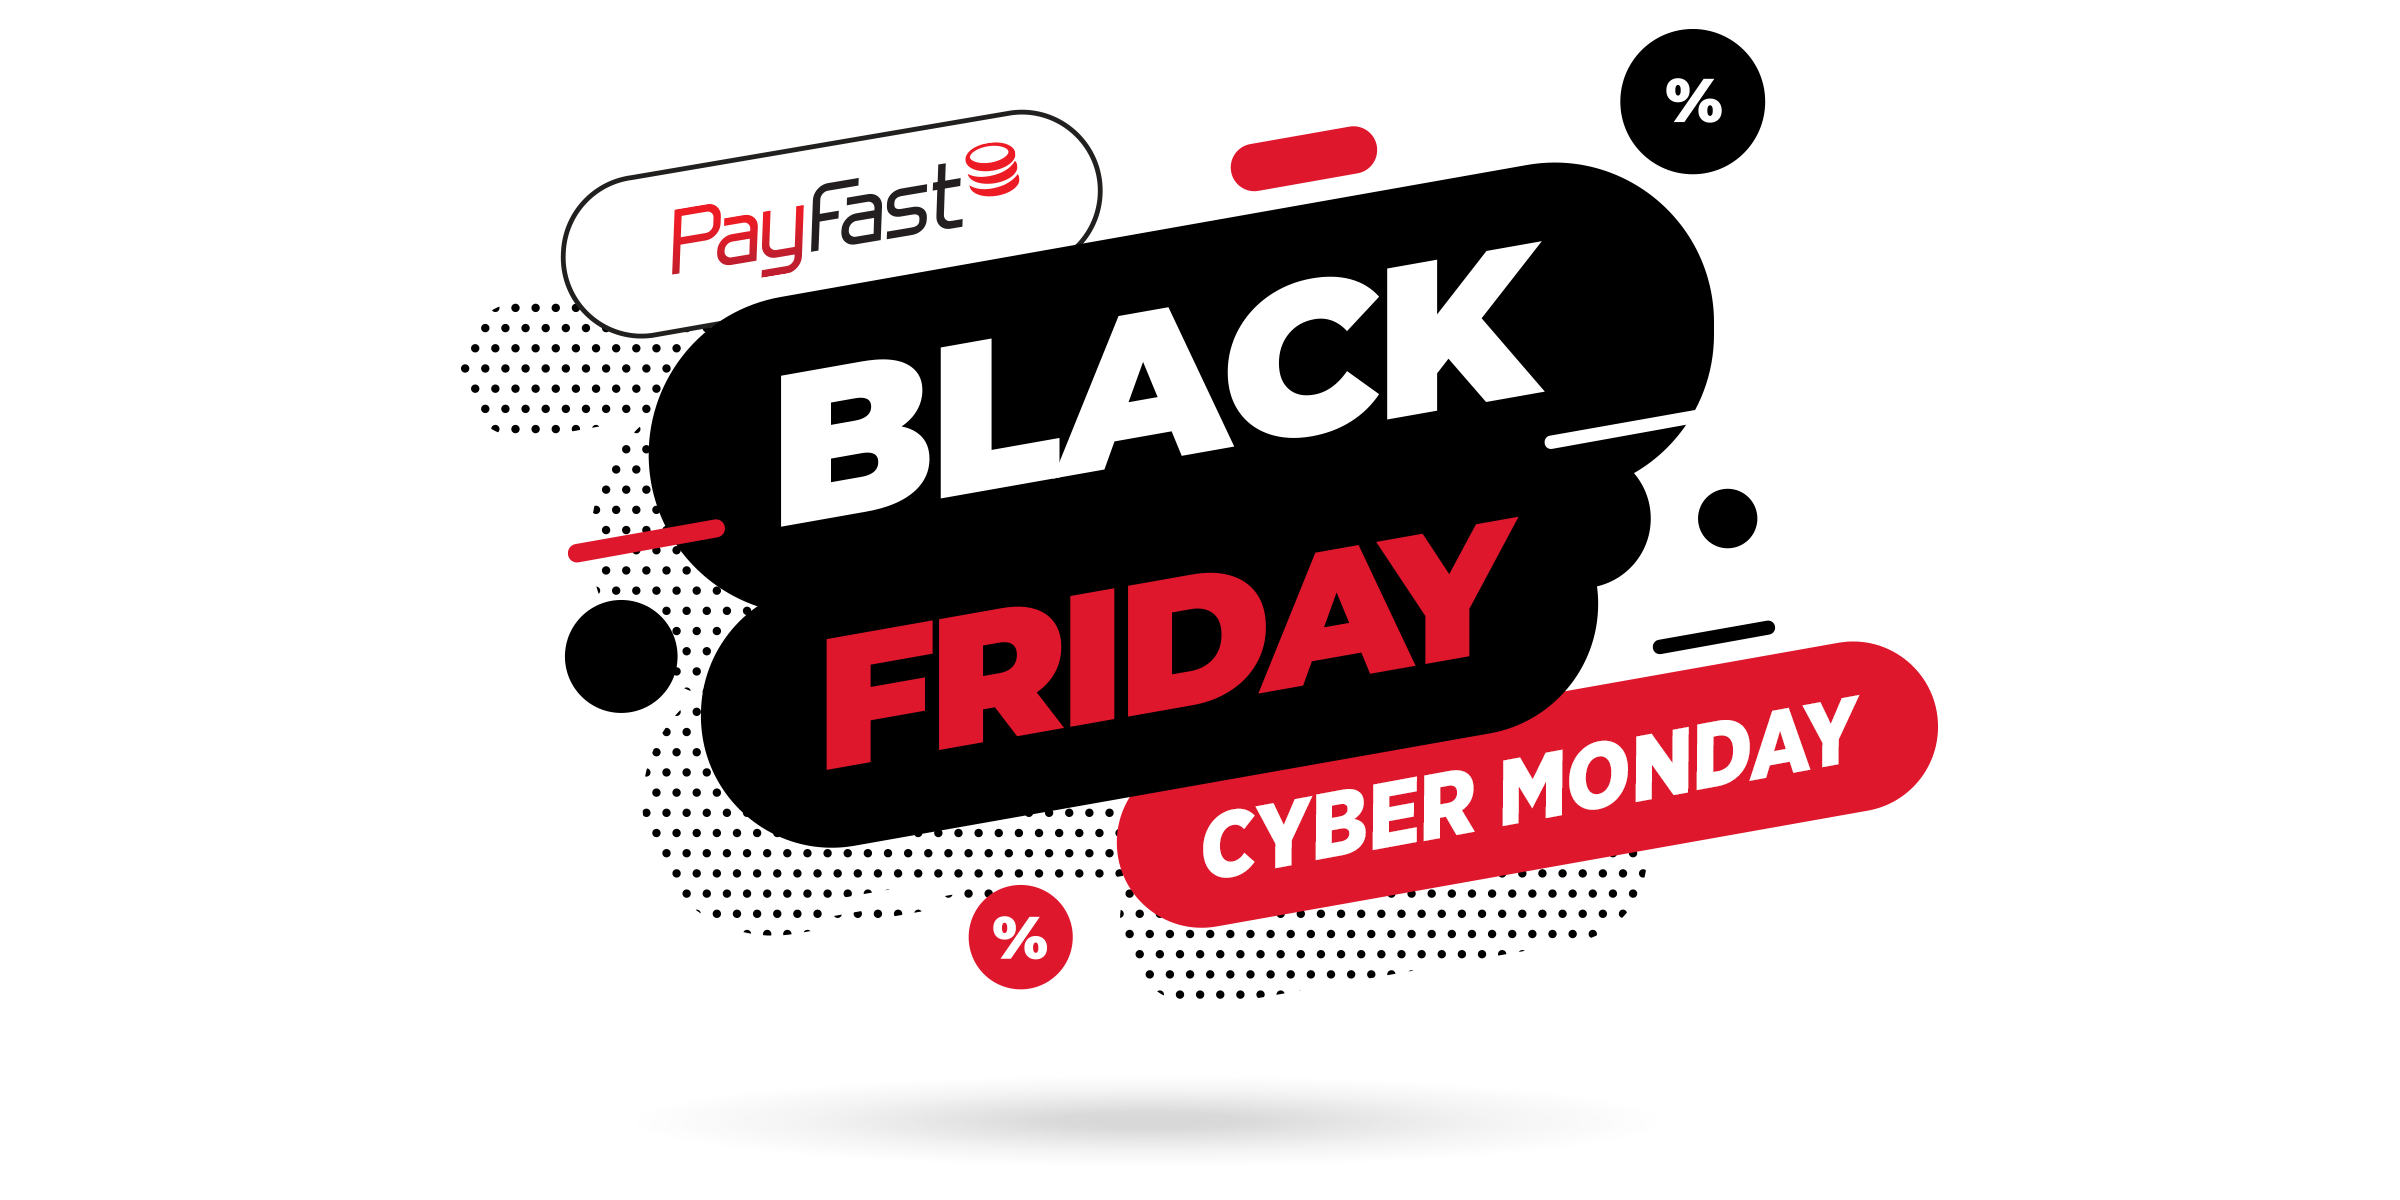 PayFast Black Friday Cyber Monday